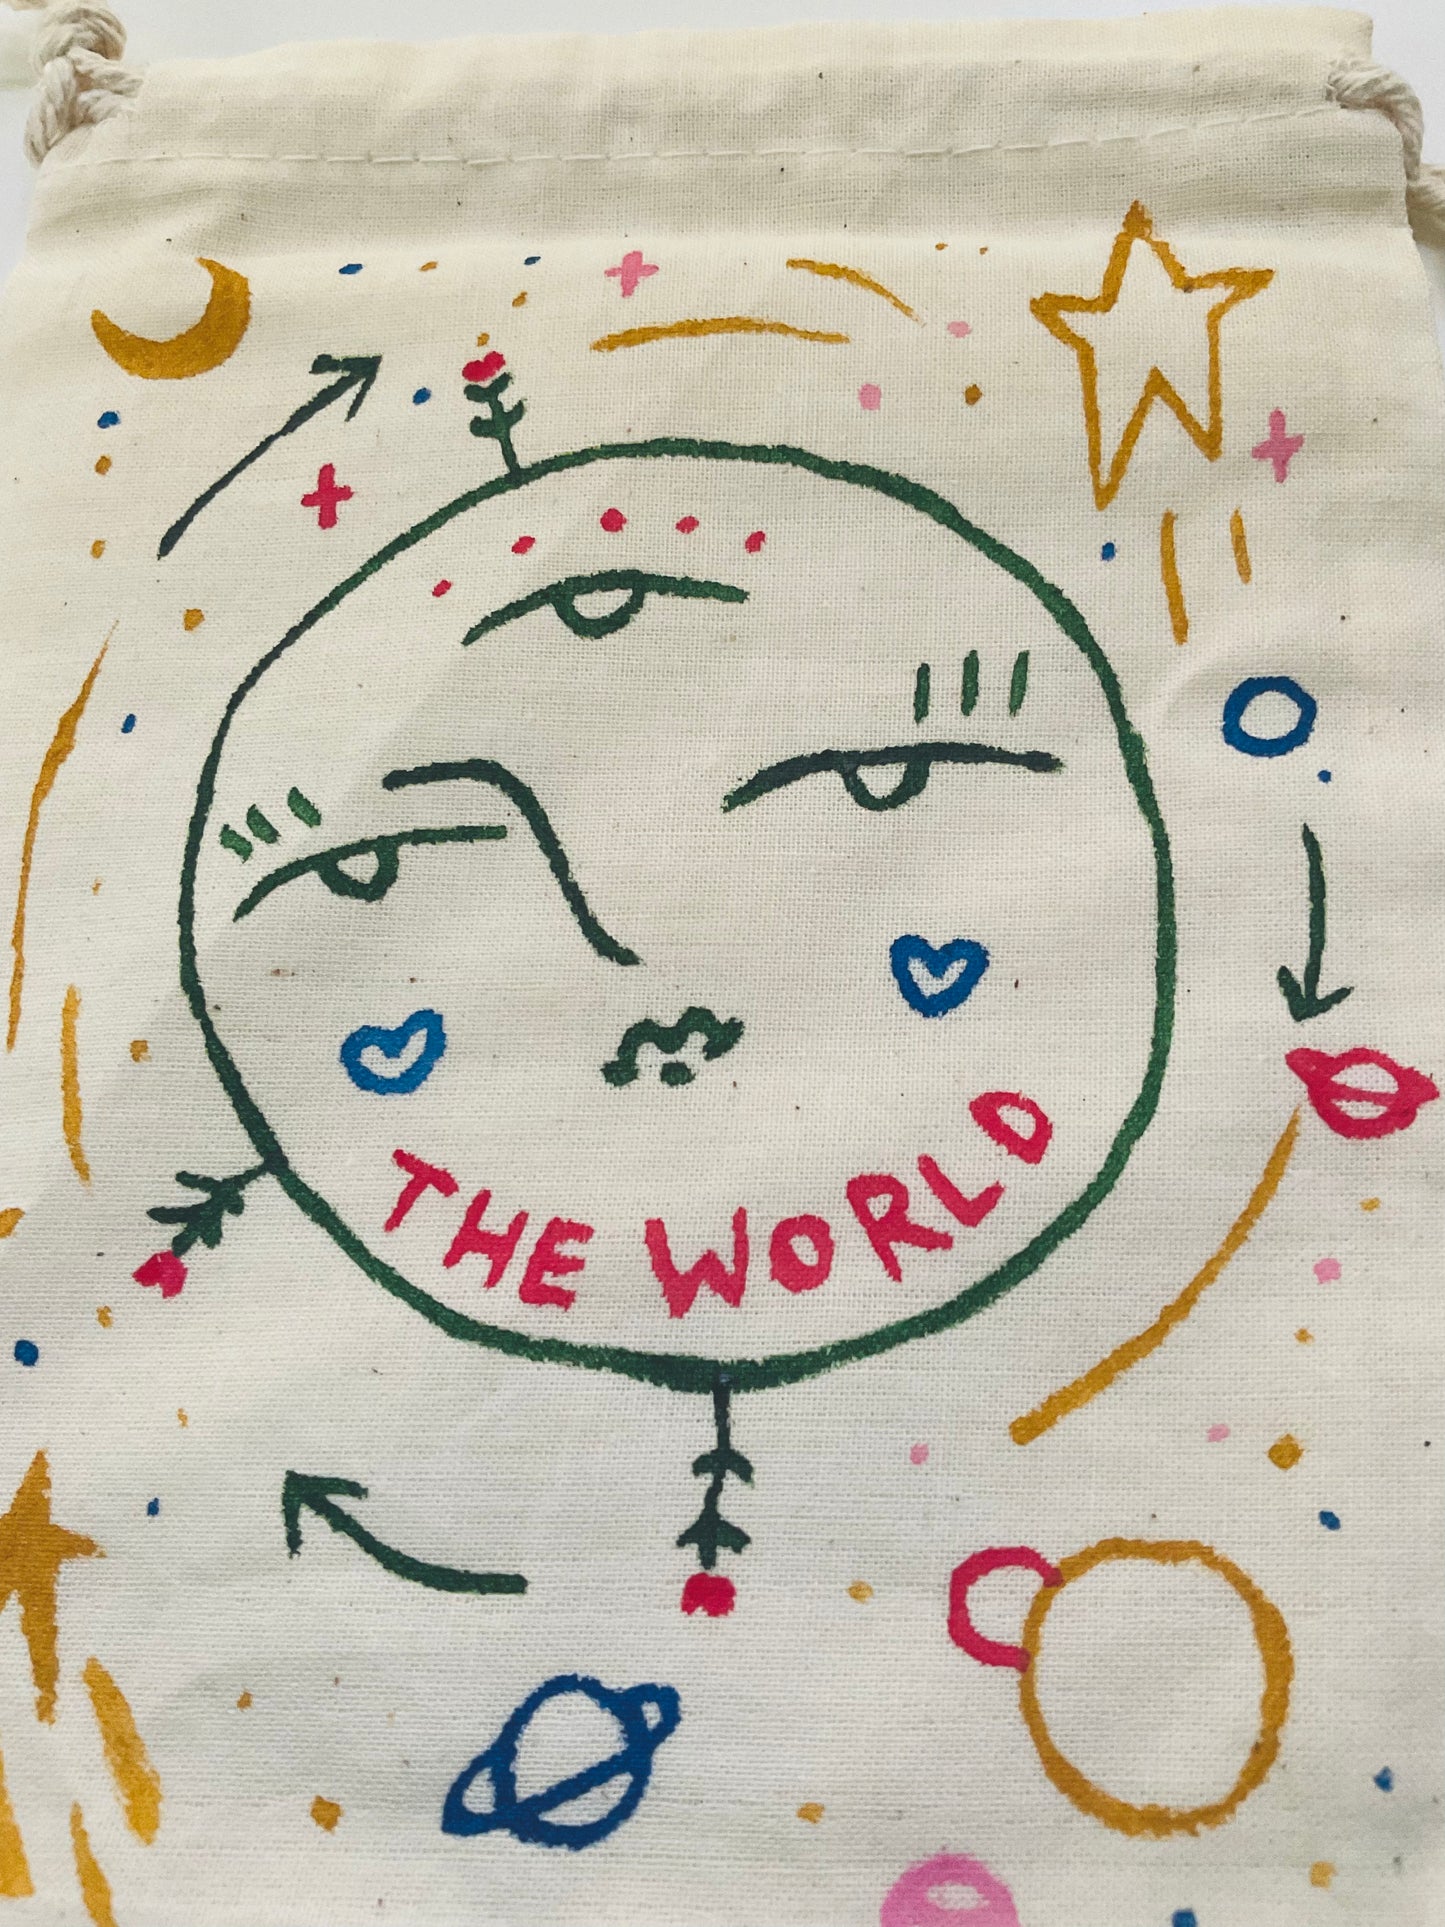 The World Painted Tarot Bag